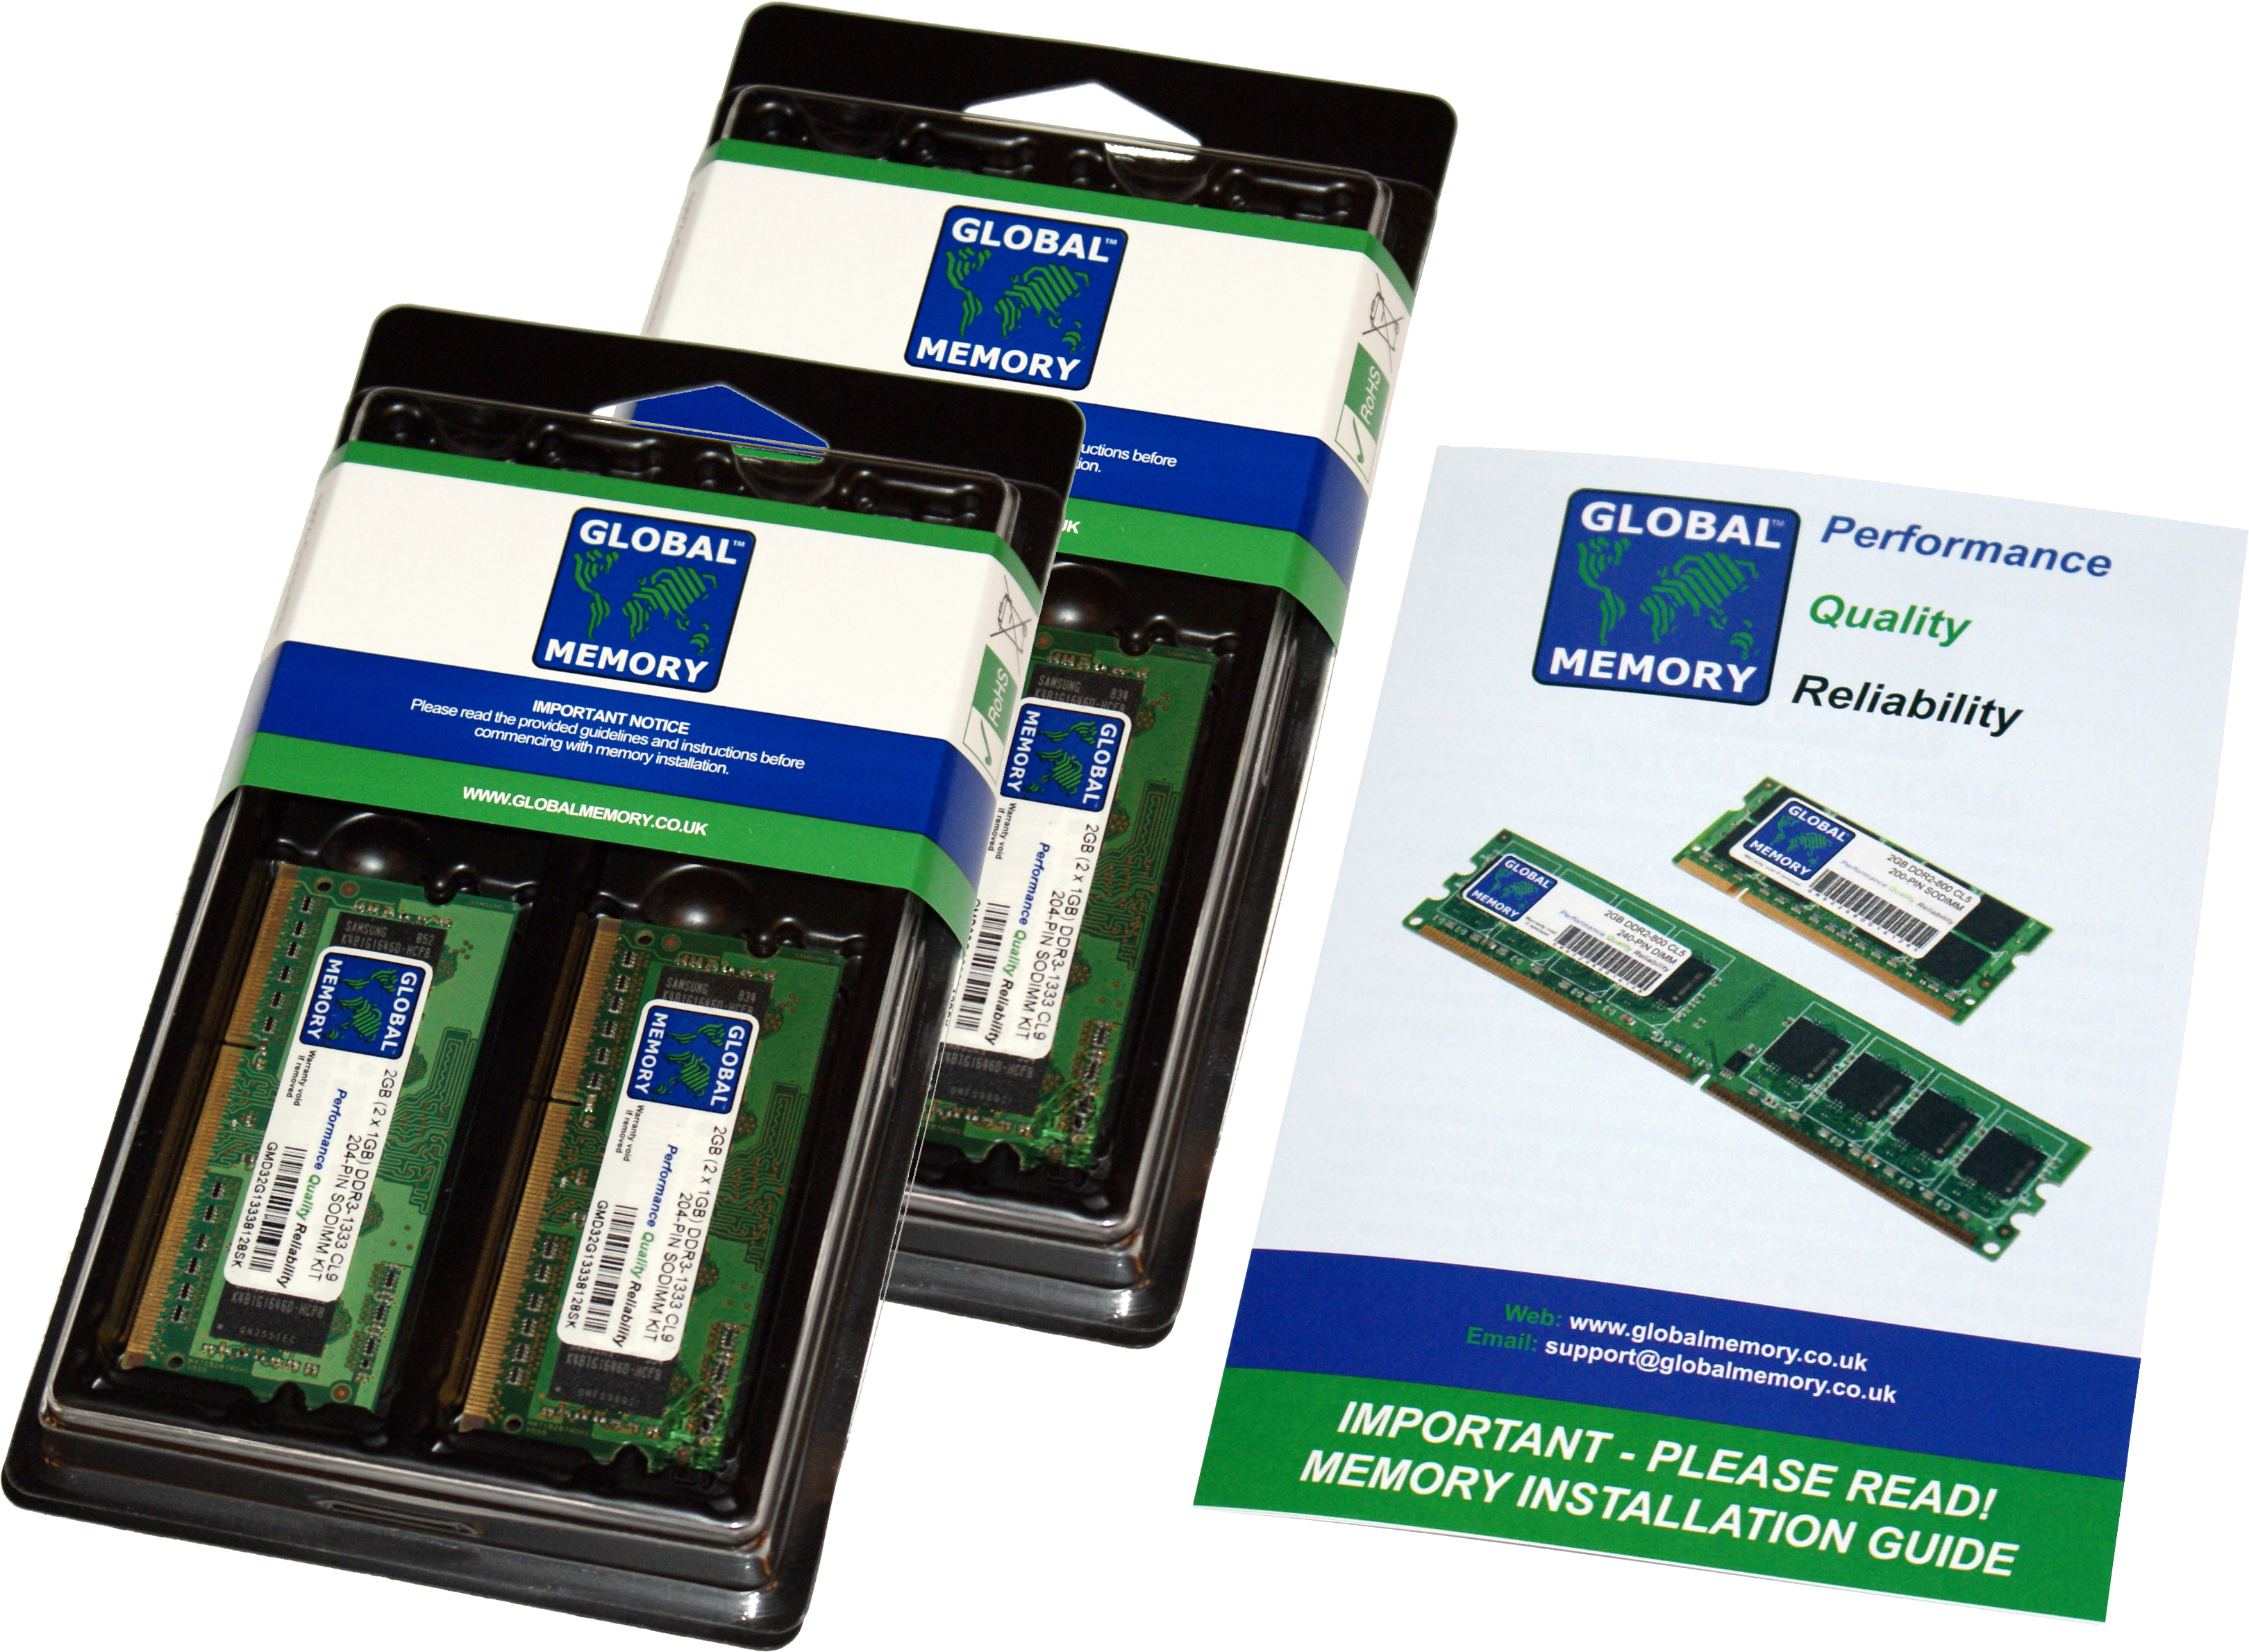 16GB (4 x 4GB) DDR4 2666MHz PC4-21300 260-PIN SODIMM MEMORY RAM KIT FOR TOSHIBA LAPTOPS/NOTEBOOKS